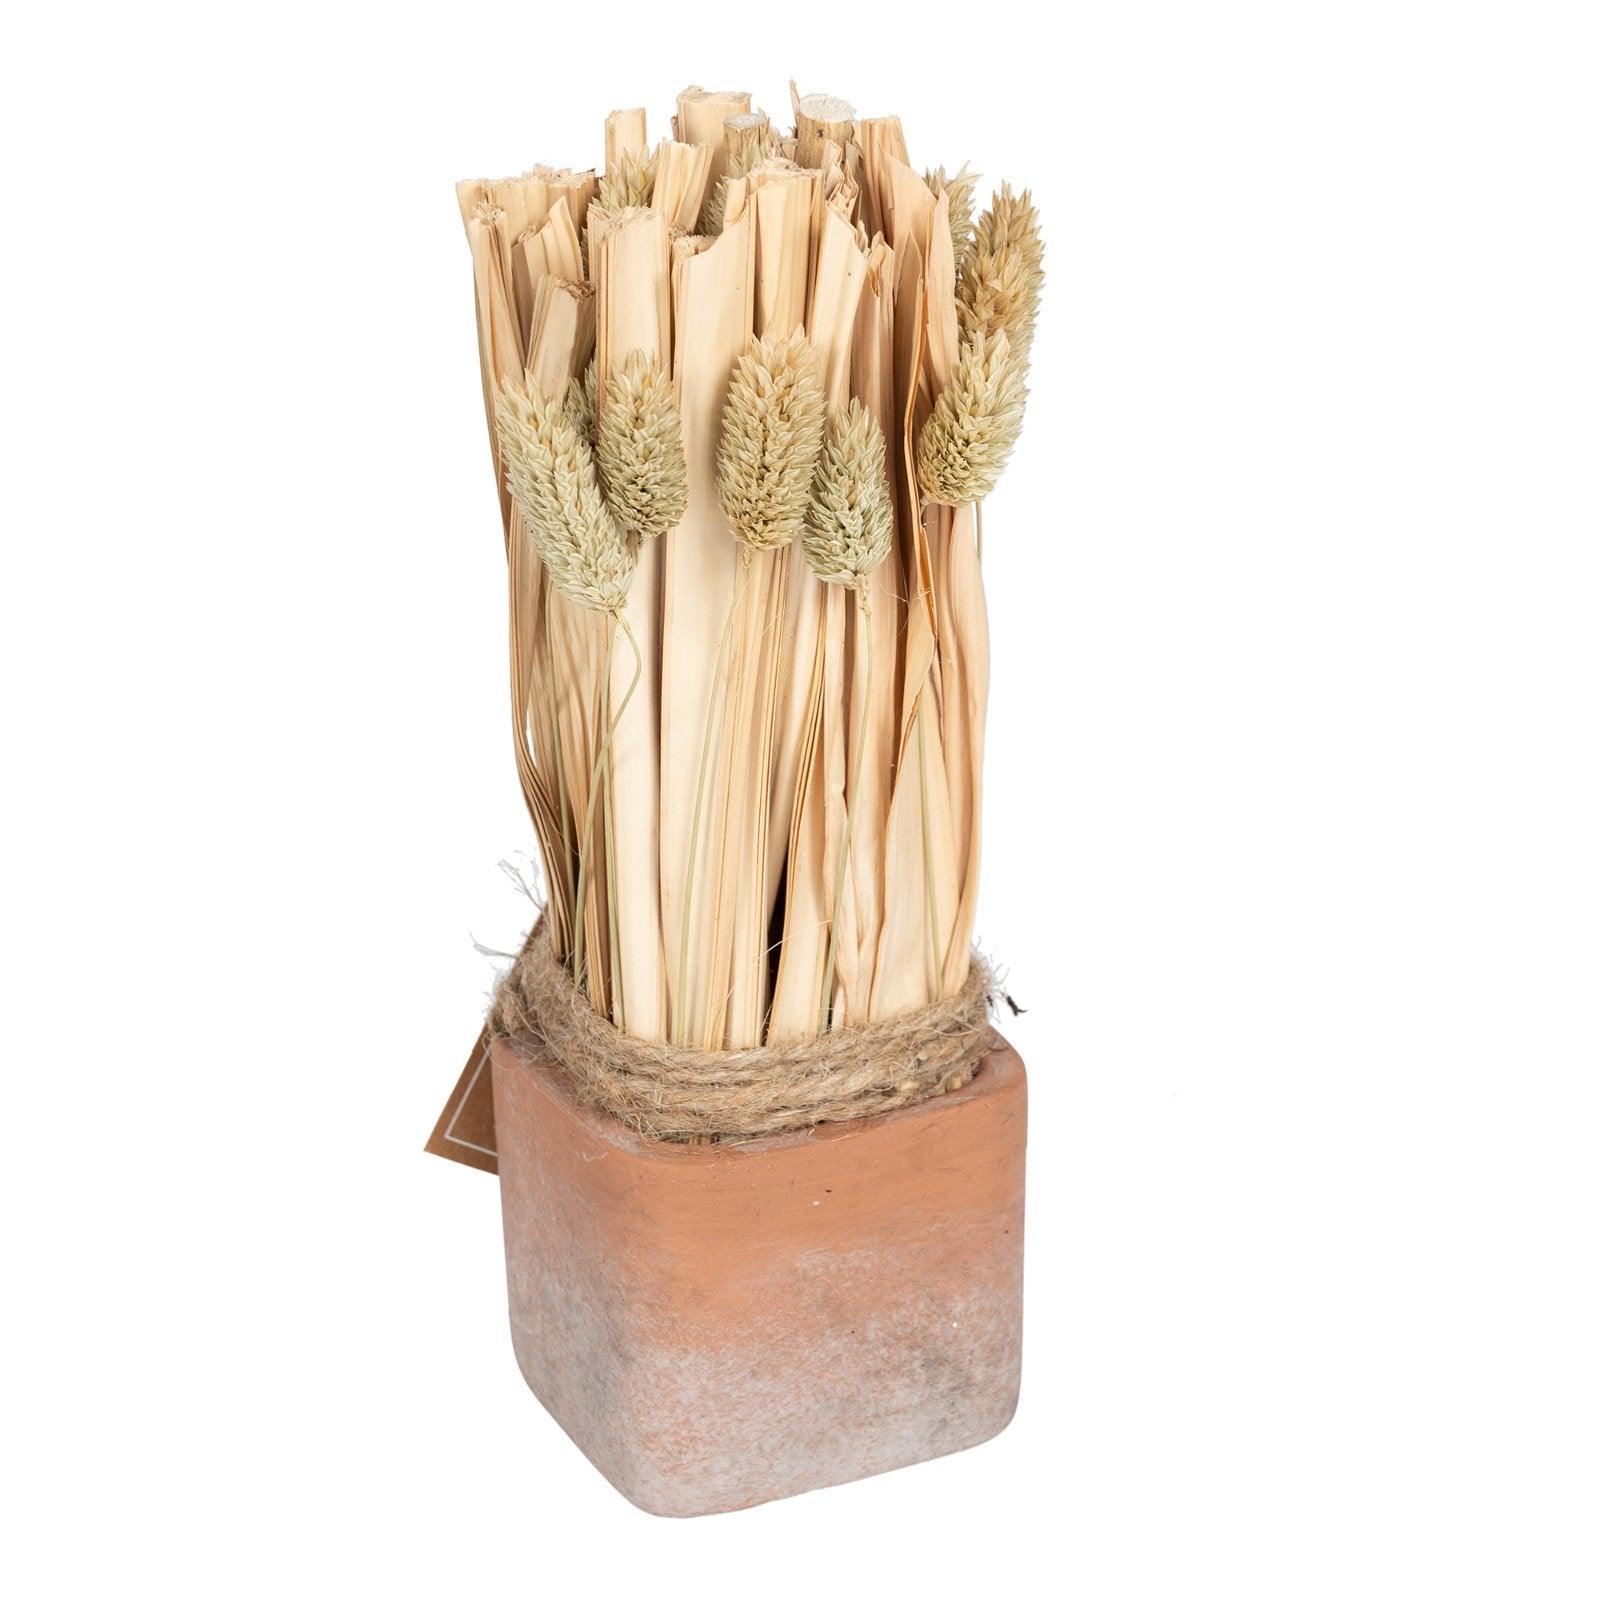 View Fluffy Dried Grass Bouquet in Terracotta Pot information